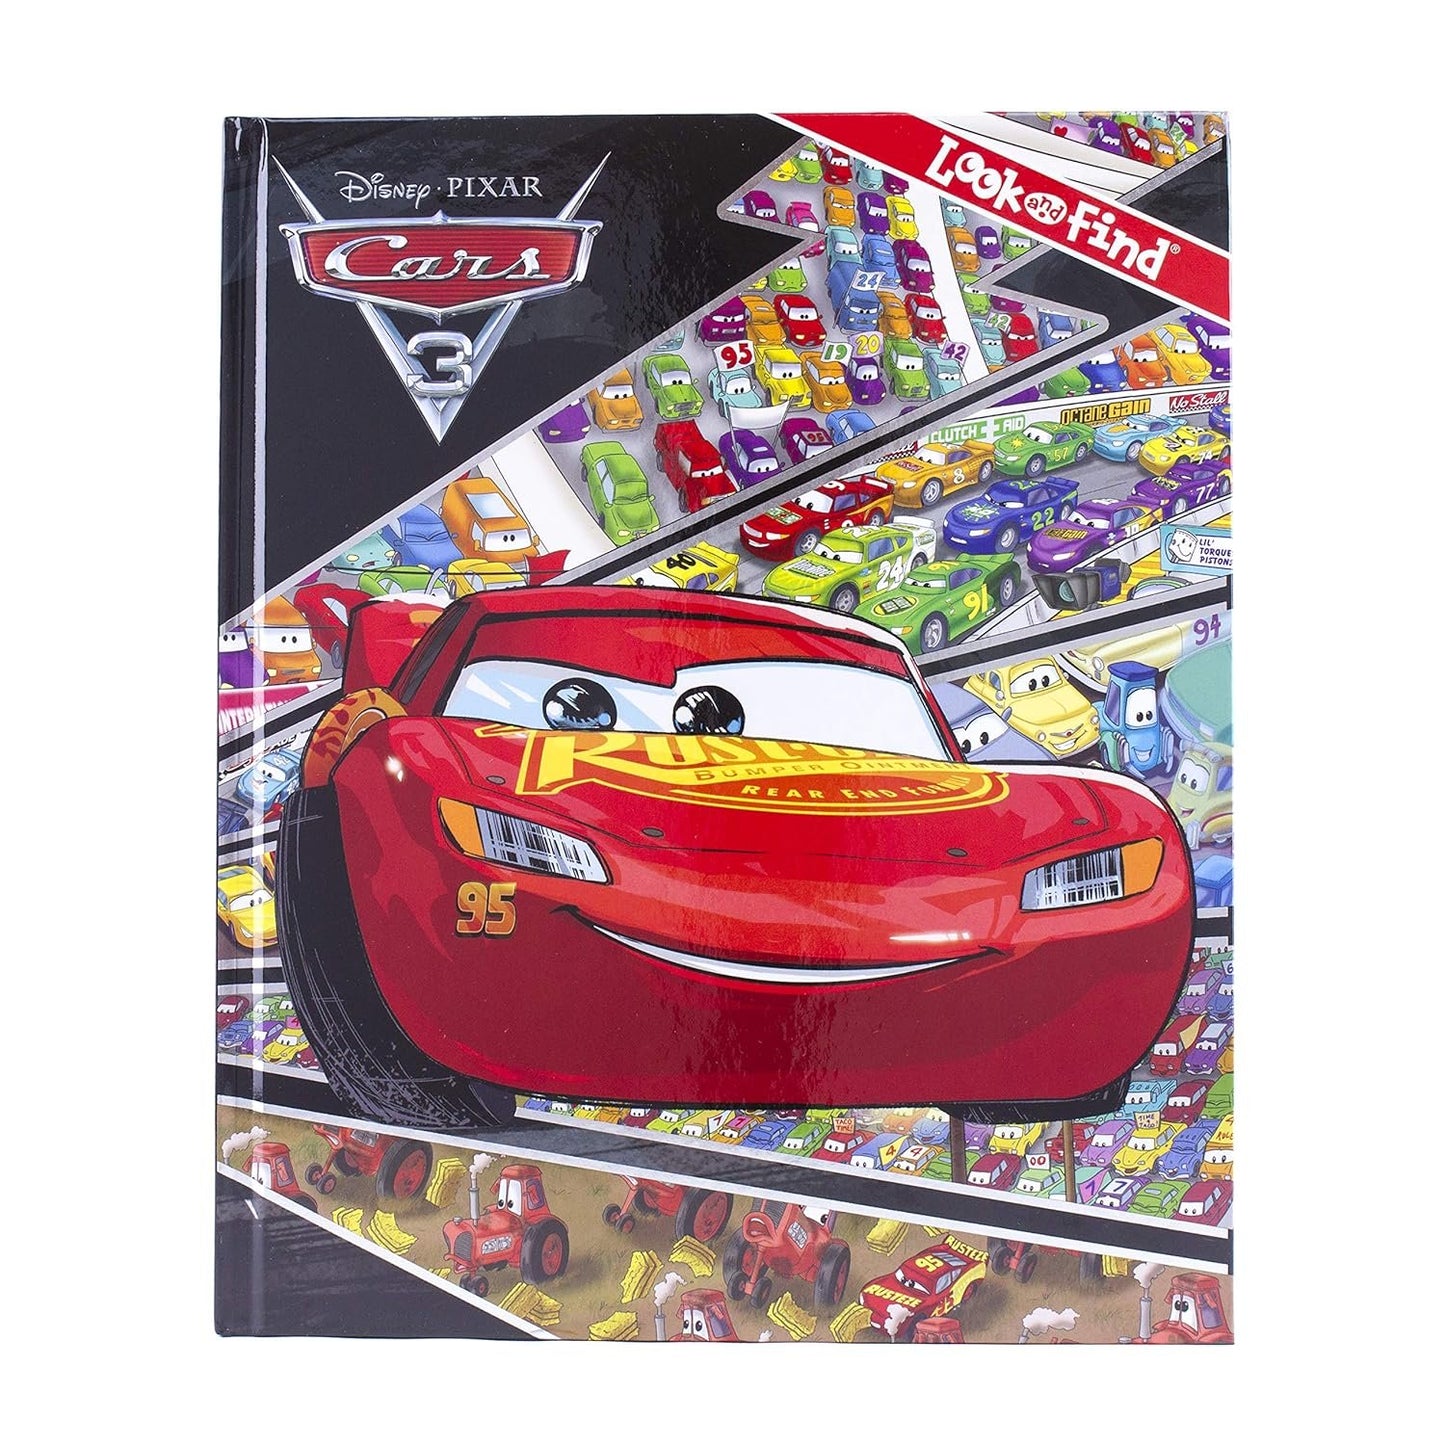 Disney Pixar - Cars 3 Look and Find Activity Book - PI Kids